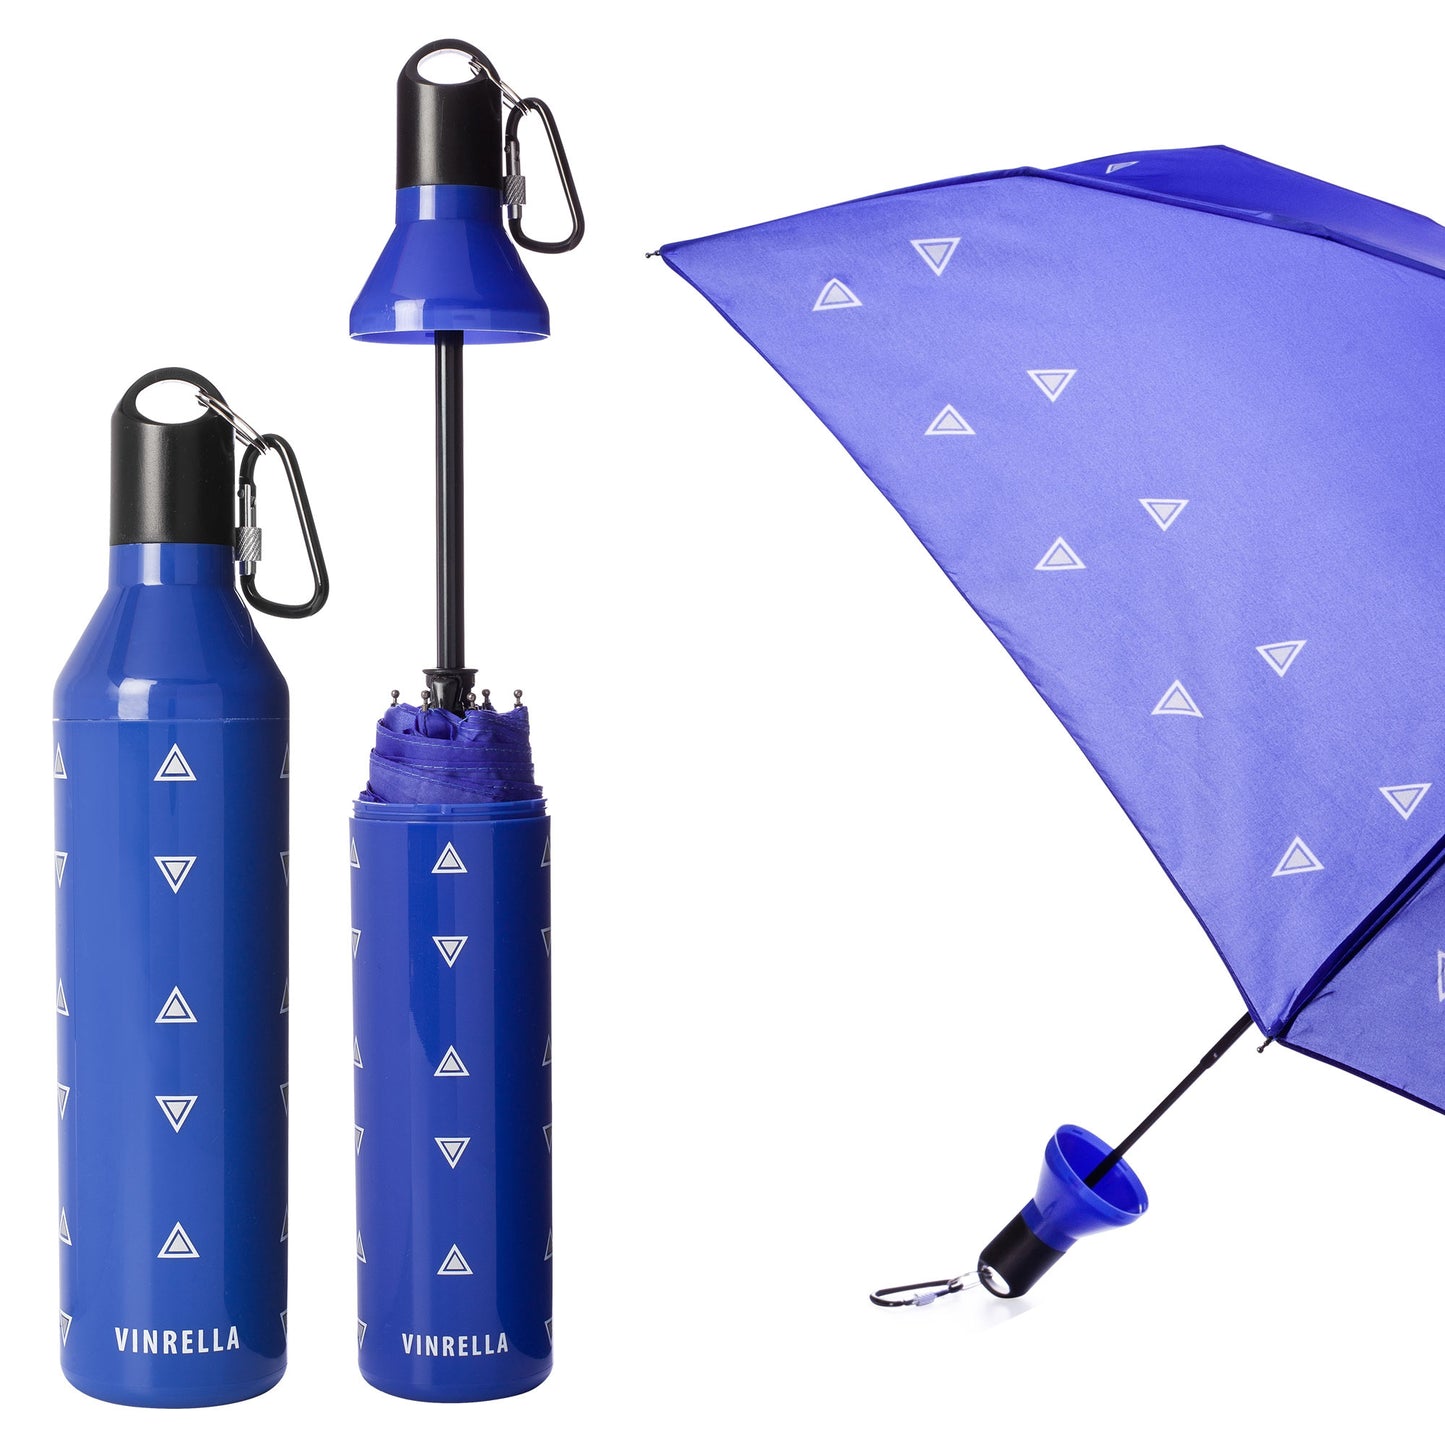 Vinrella: Umbrella In A Bottle